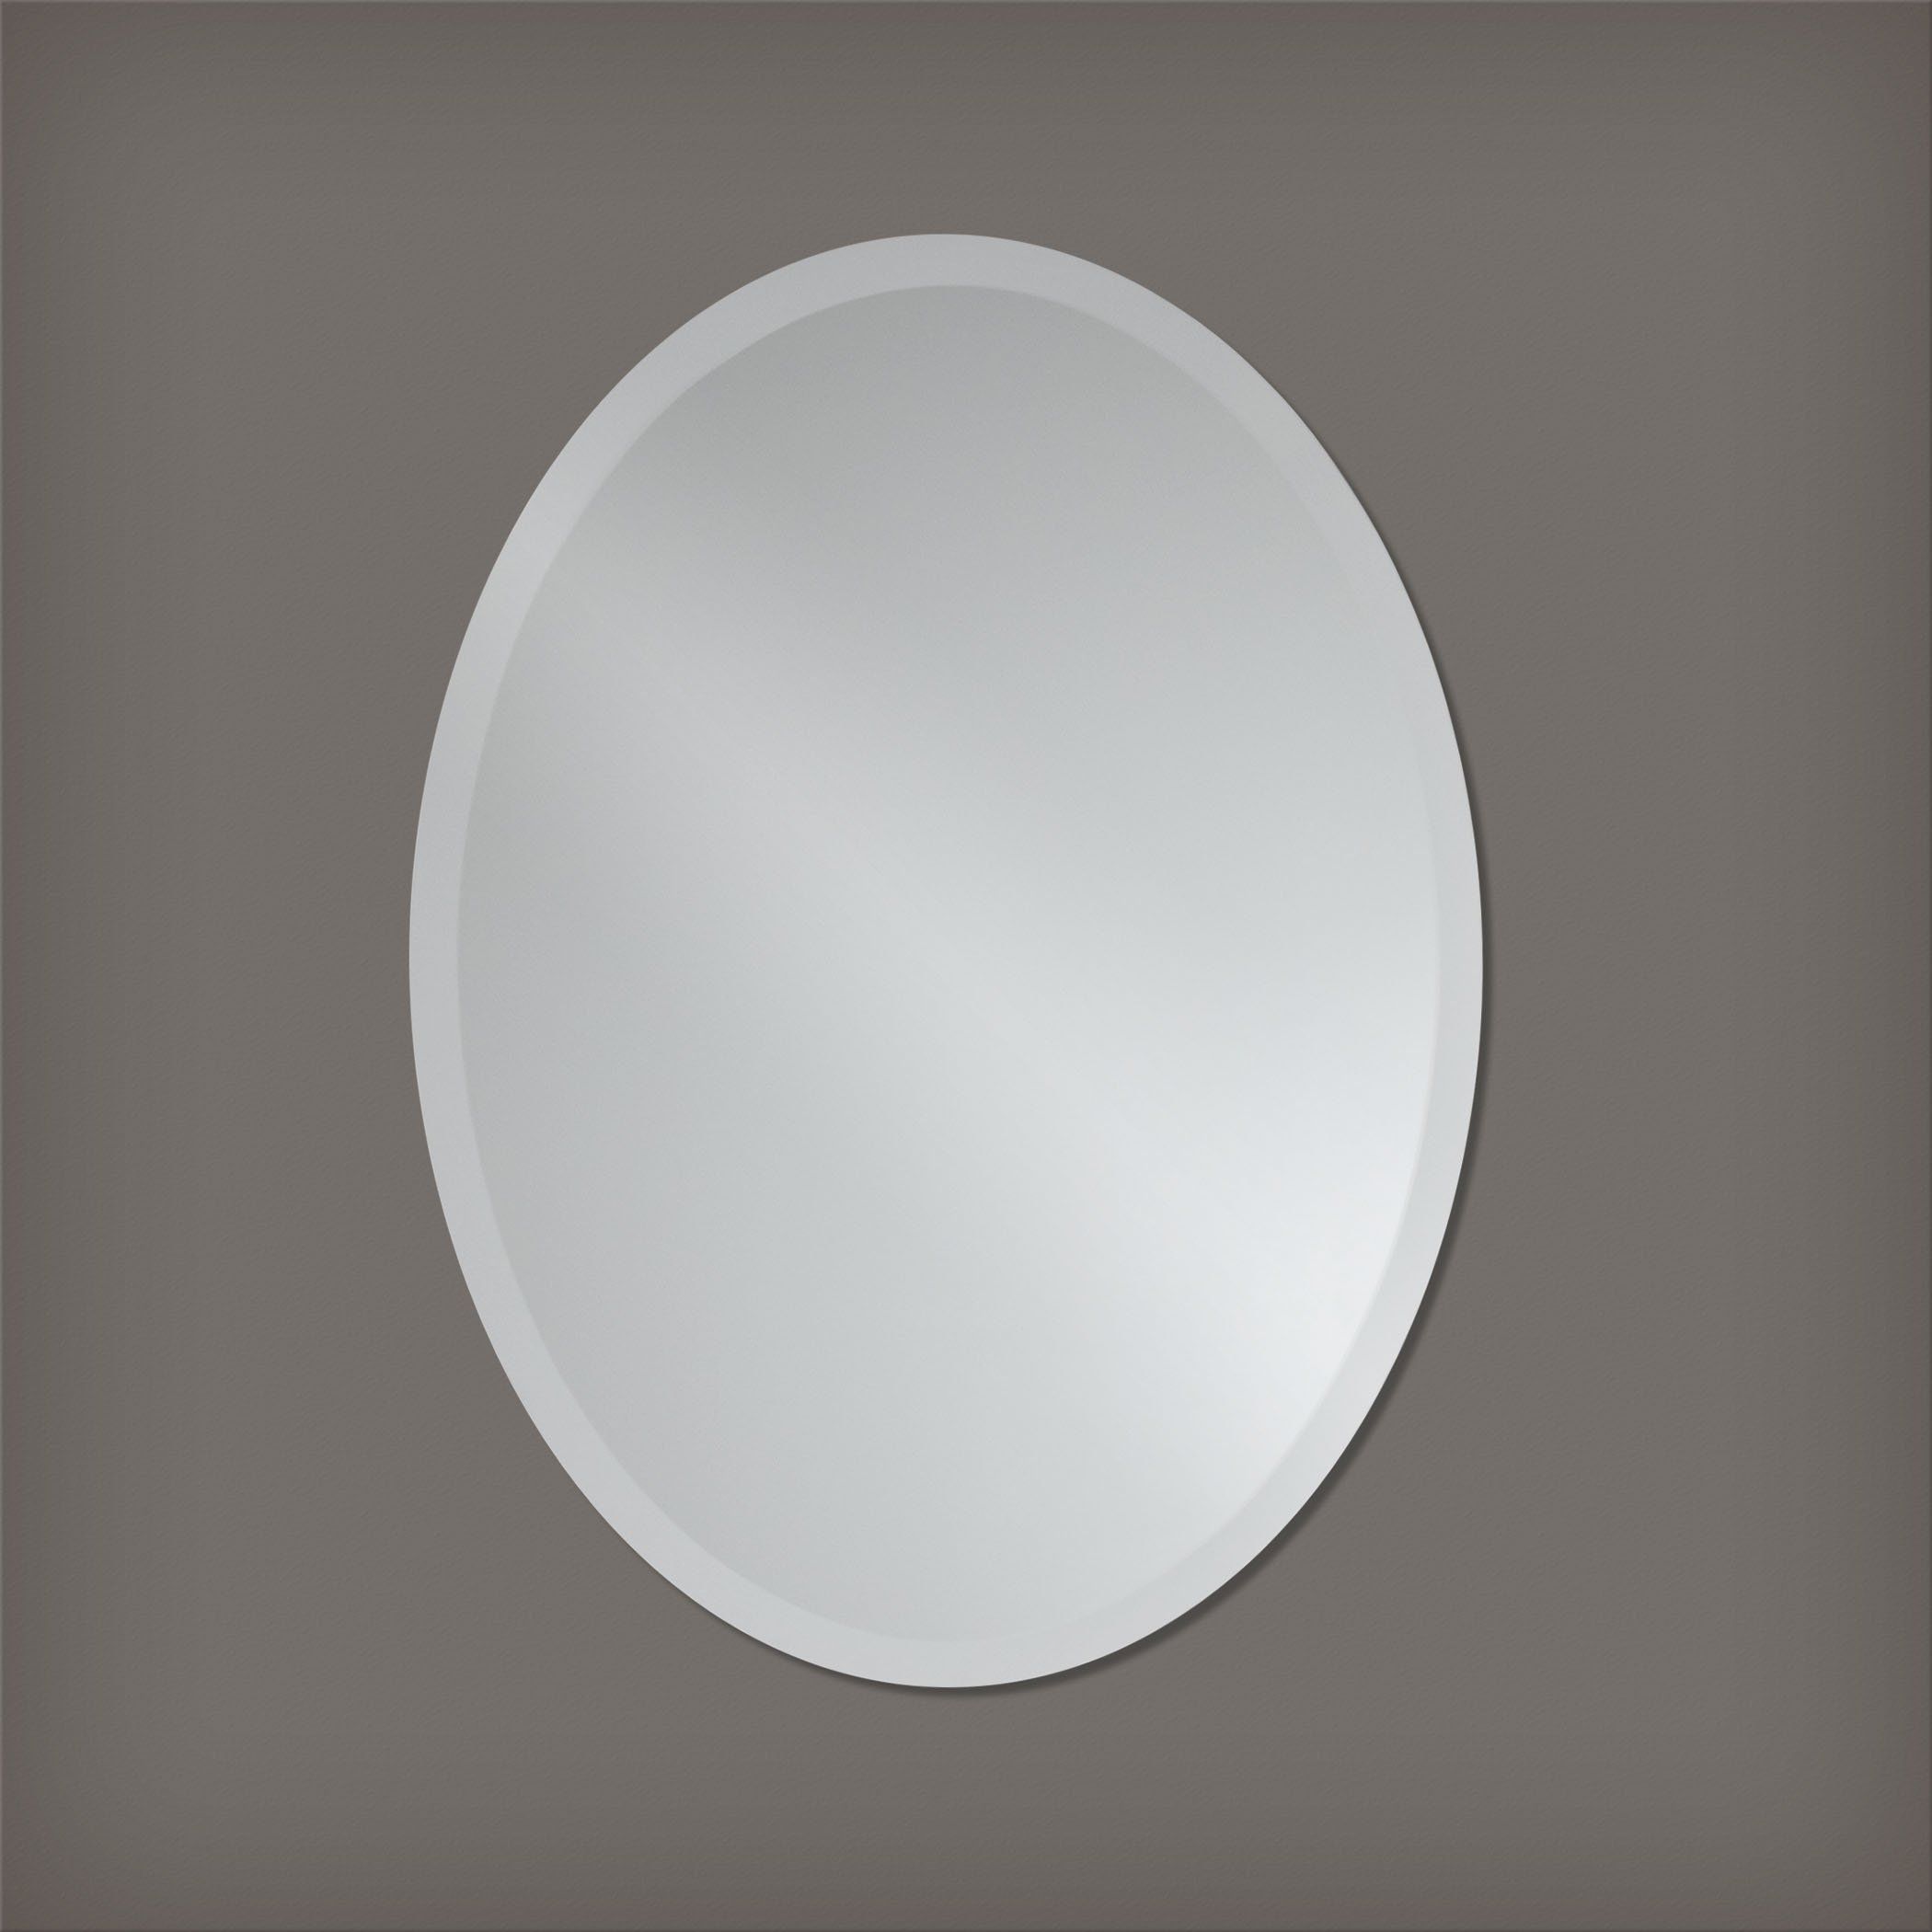 Small Frameless Beveled Oval Wall Mirror Bathroom Vanity Bedroom Mirror For Oval Beveled Frameless Wall Mirrors (Photo 1 of 15)